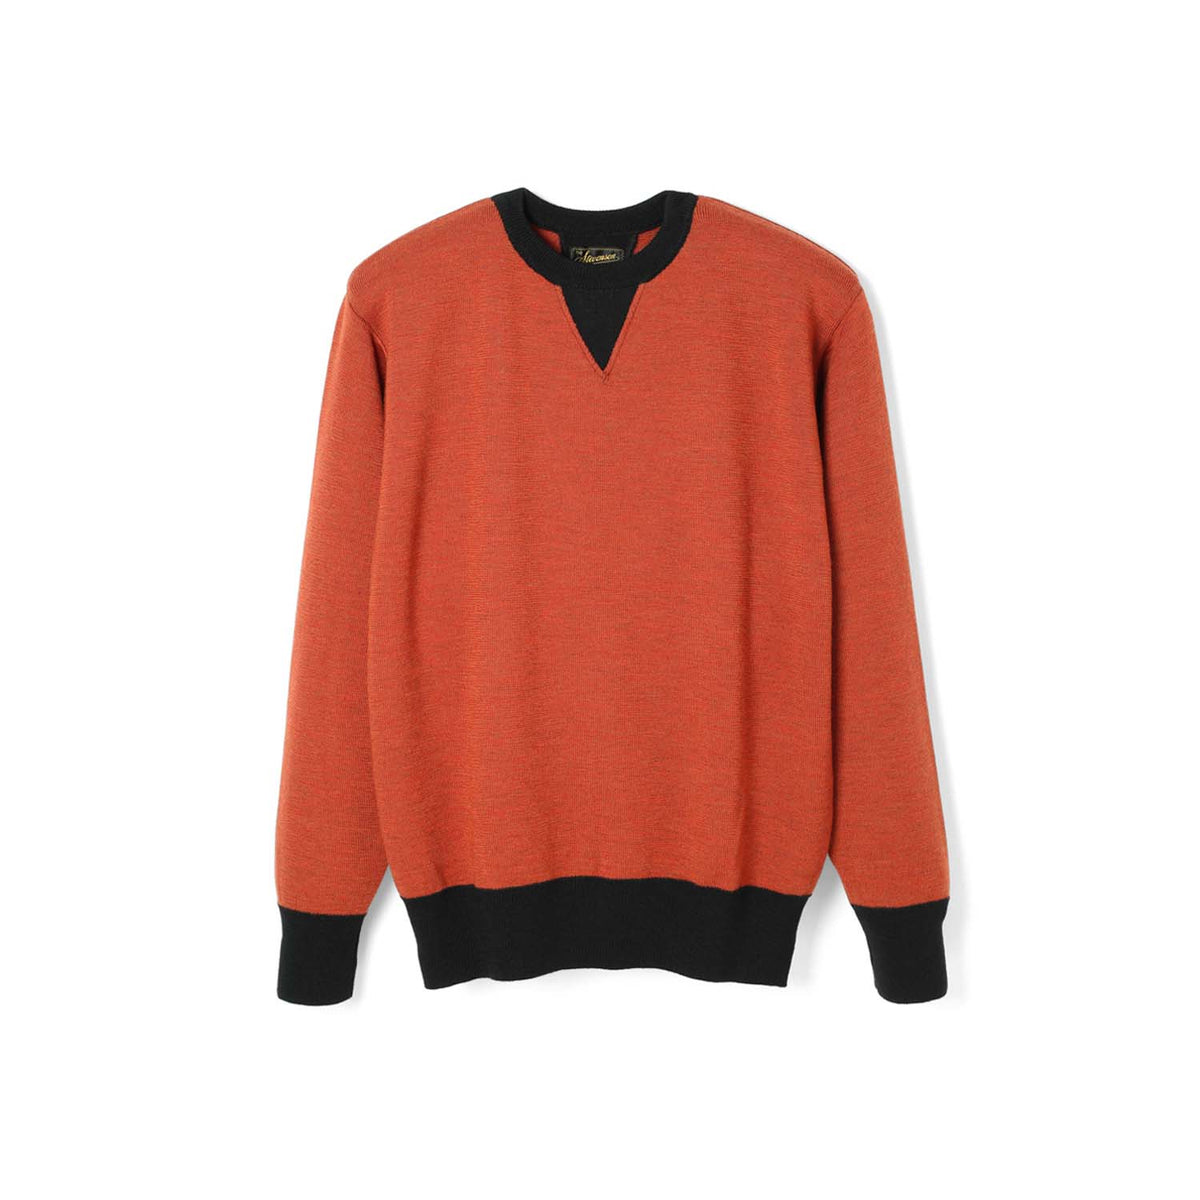 Stevenson Overall Co. V-Gusset Wool Knitted Sweat Shirt Orange FINAL SALE